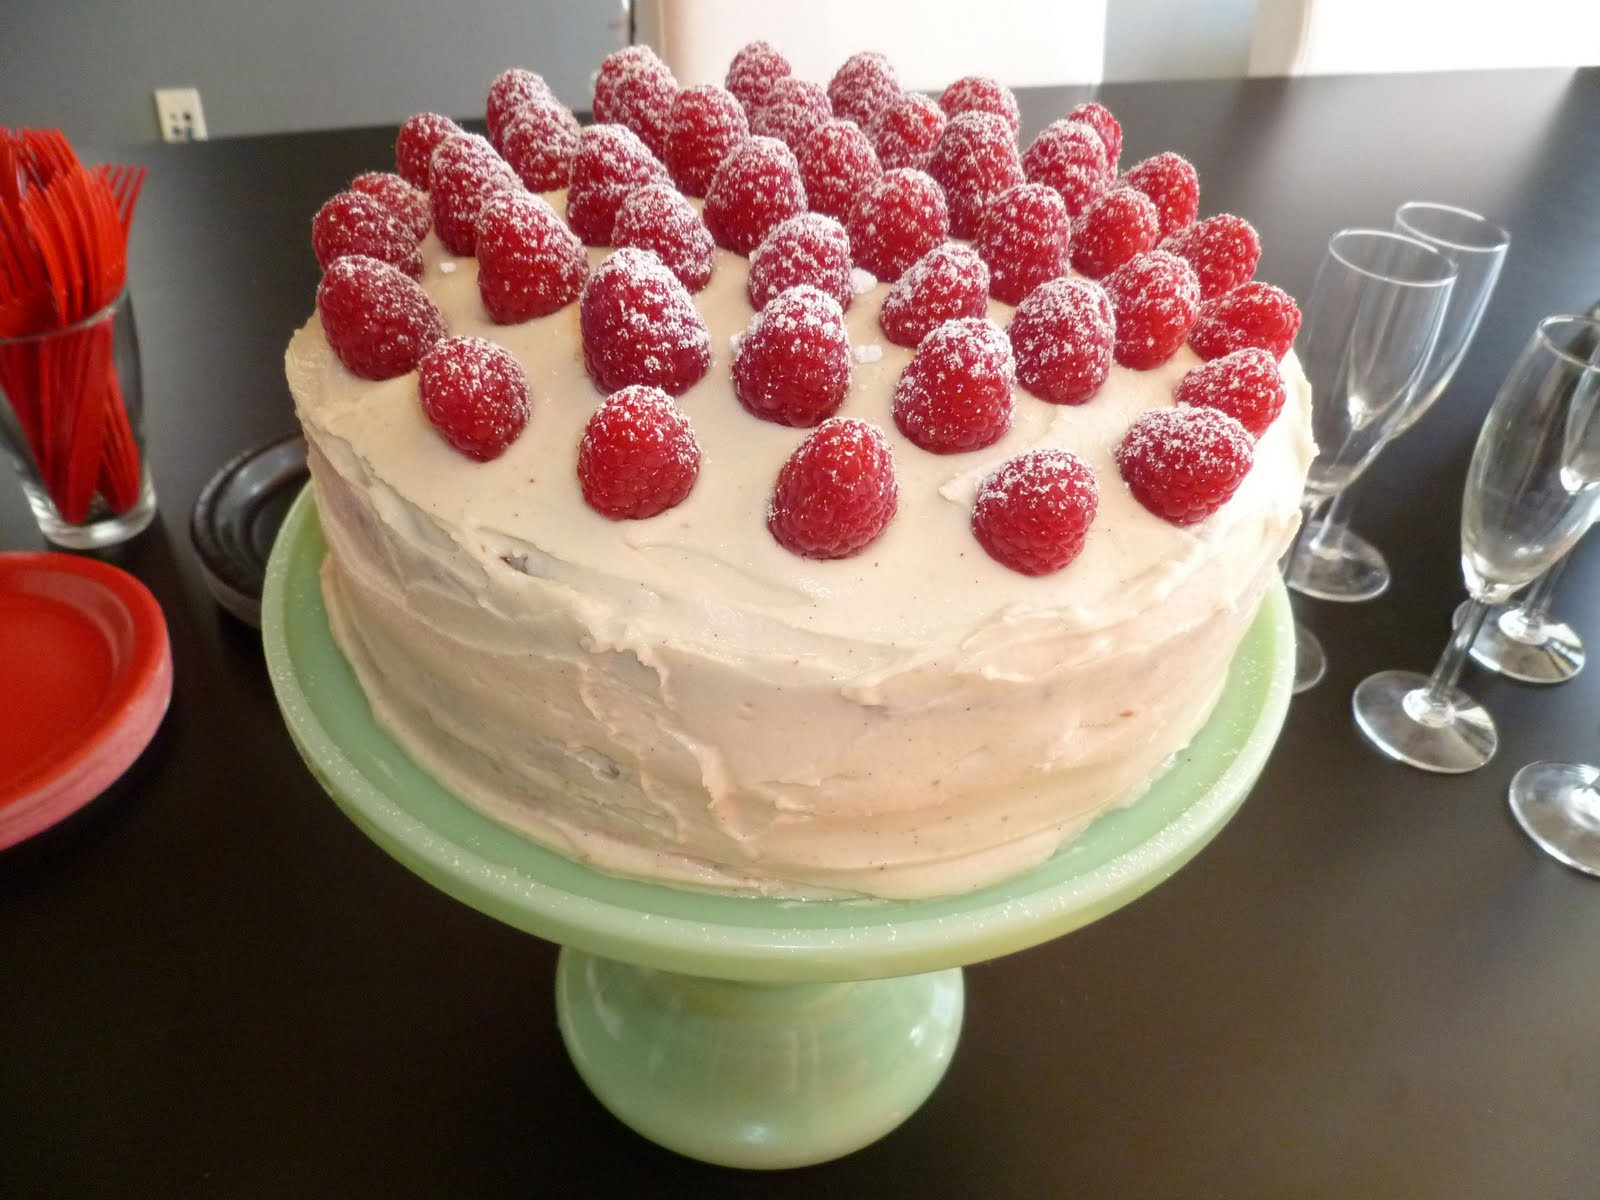 Best ideas about Vegan Birthday Cake Recipes
. Save or Pin Savvy Vegan Homemade Vegan Birthday Cakes Now.